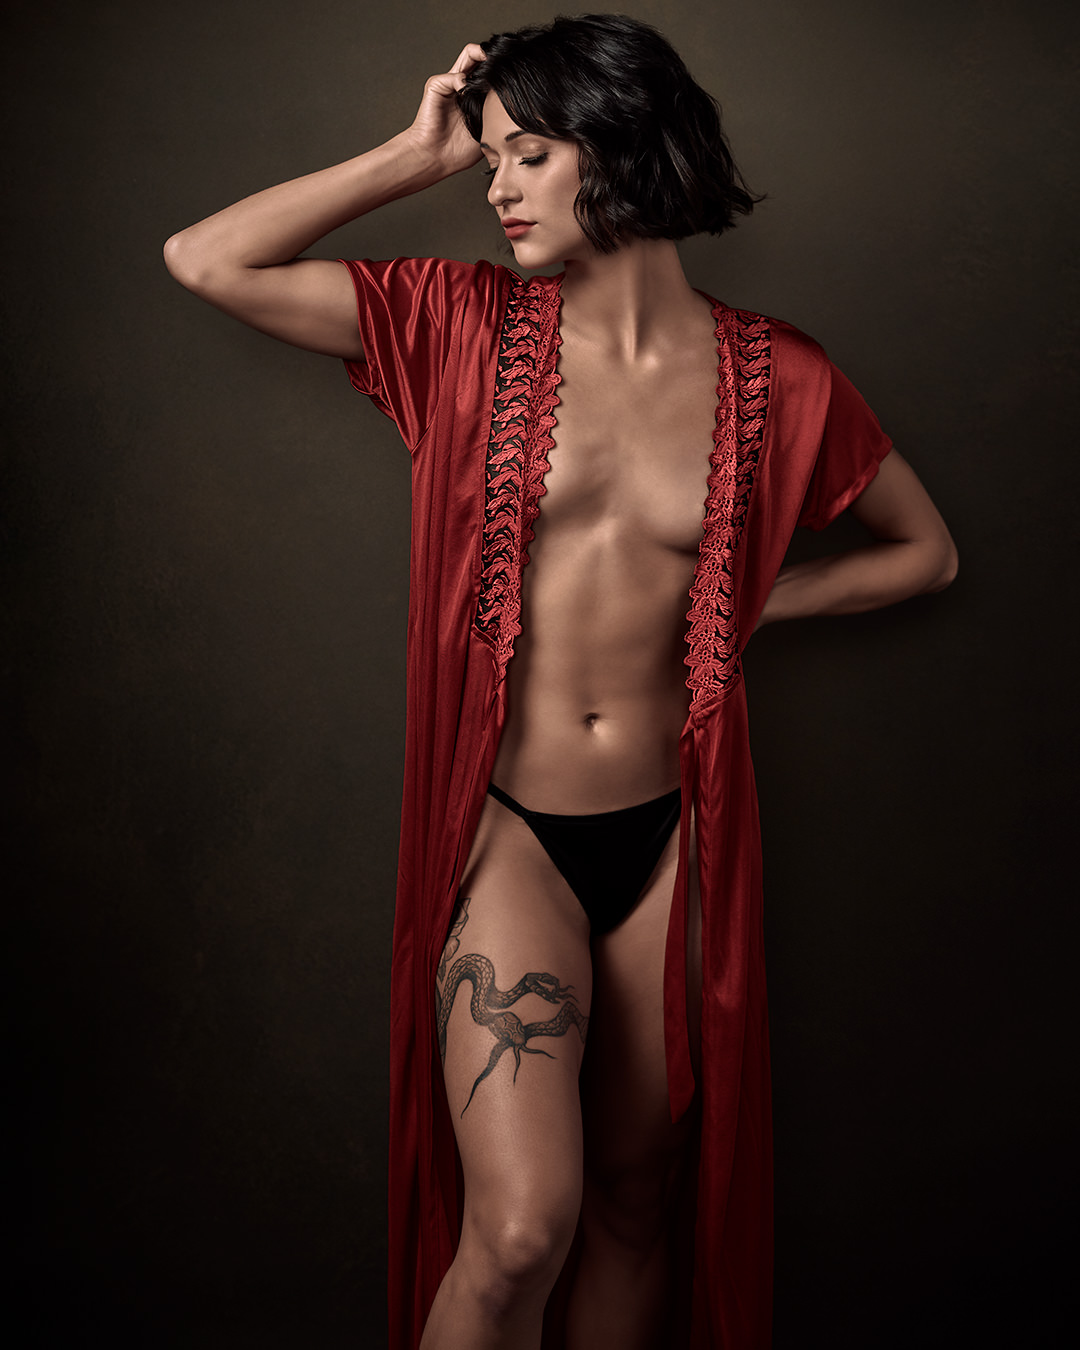 Boudoir photo with a robe